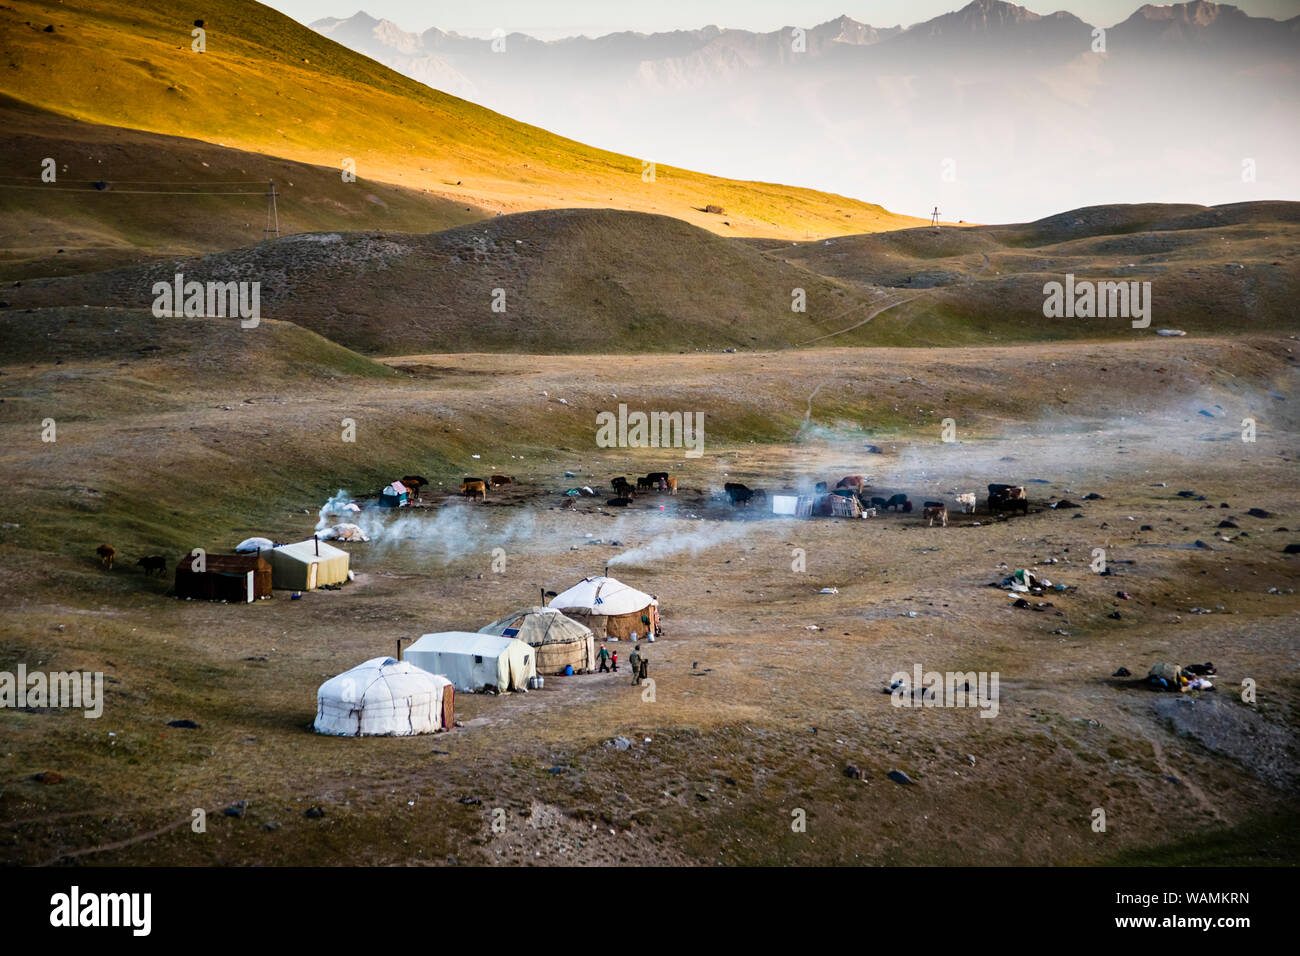 Nomads in yurts at Peak Lenin, Kyrgyzstan Stock Photo